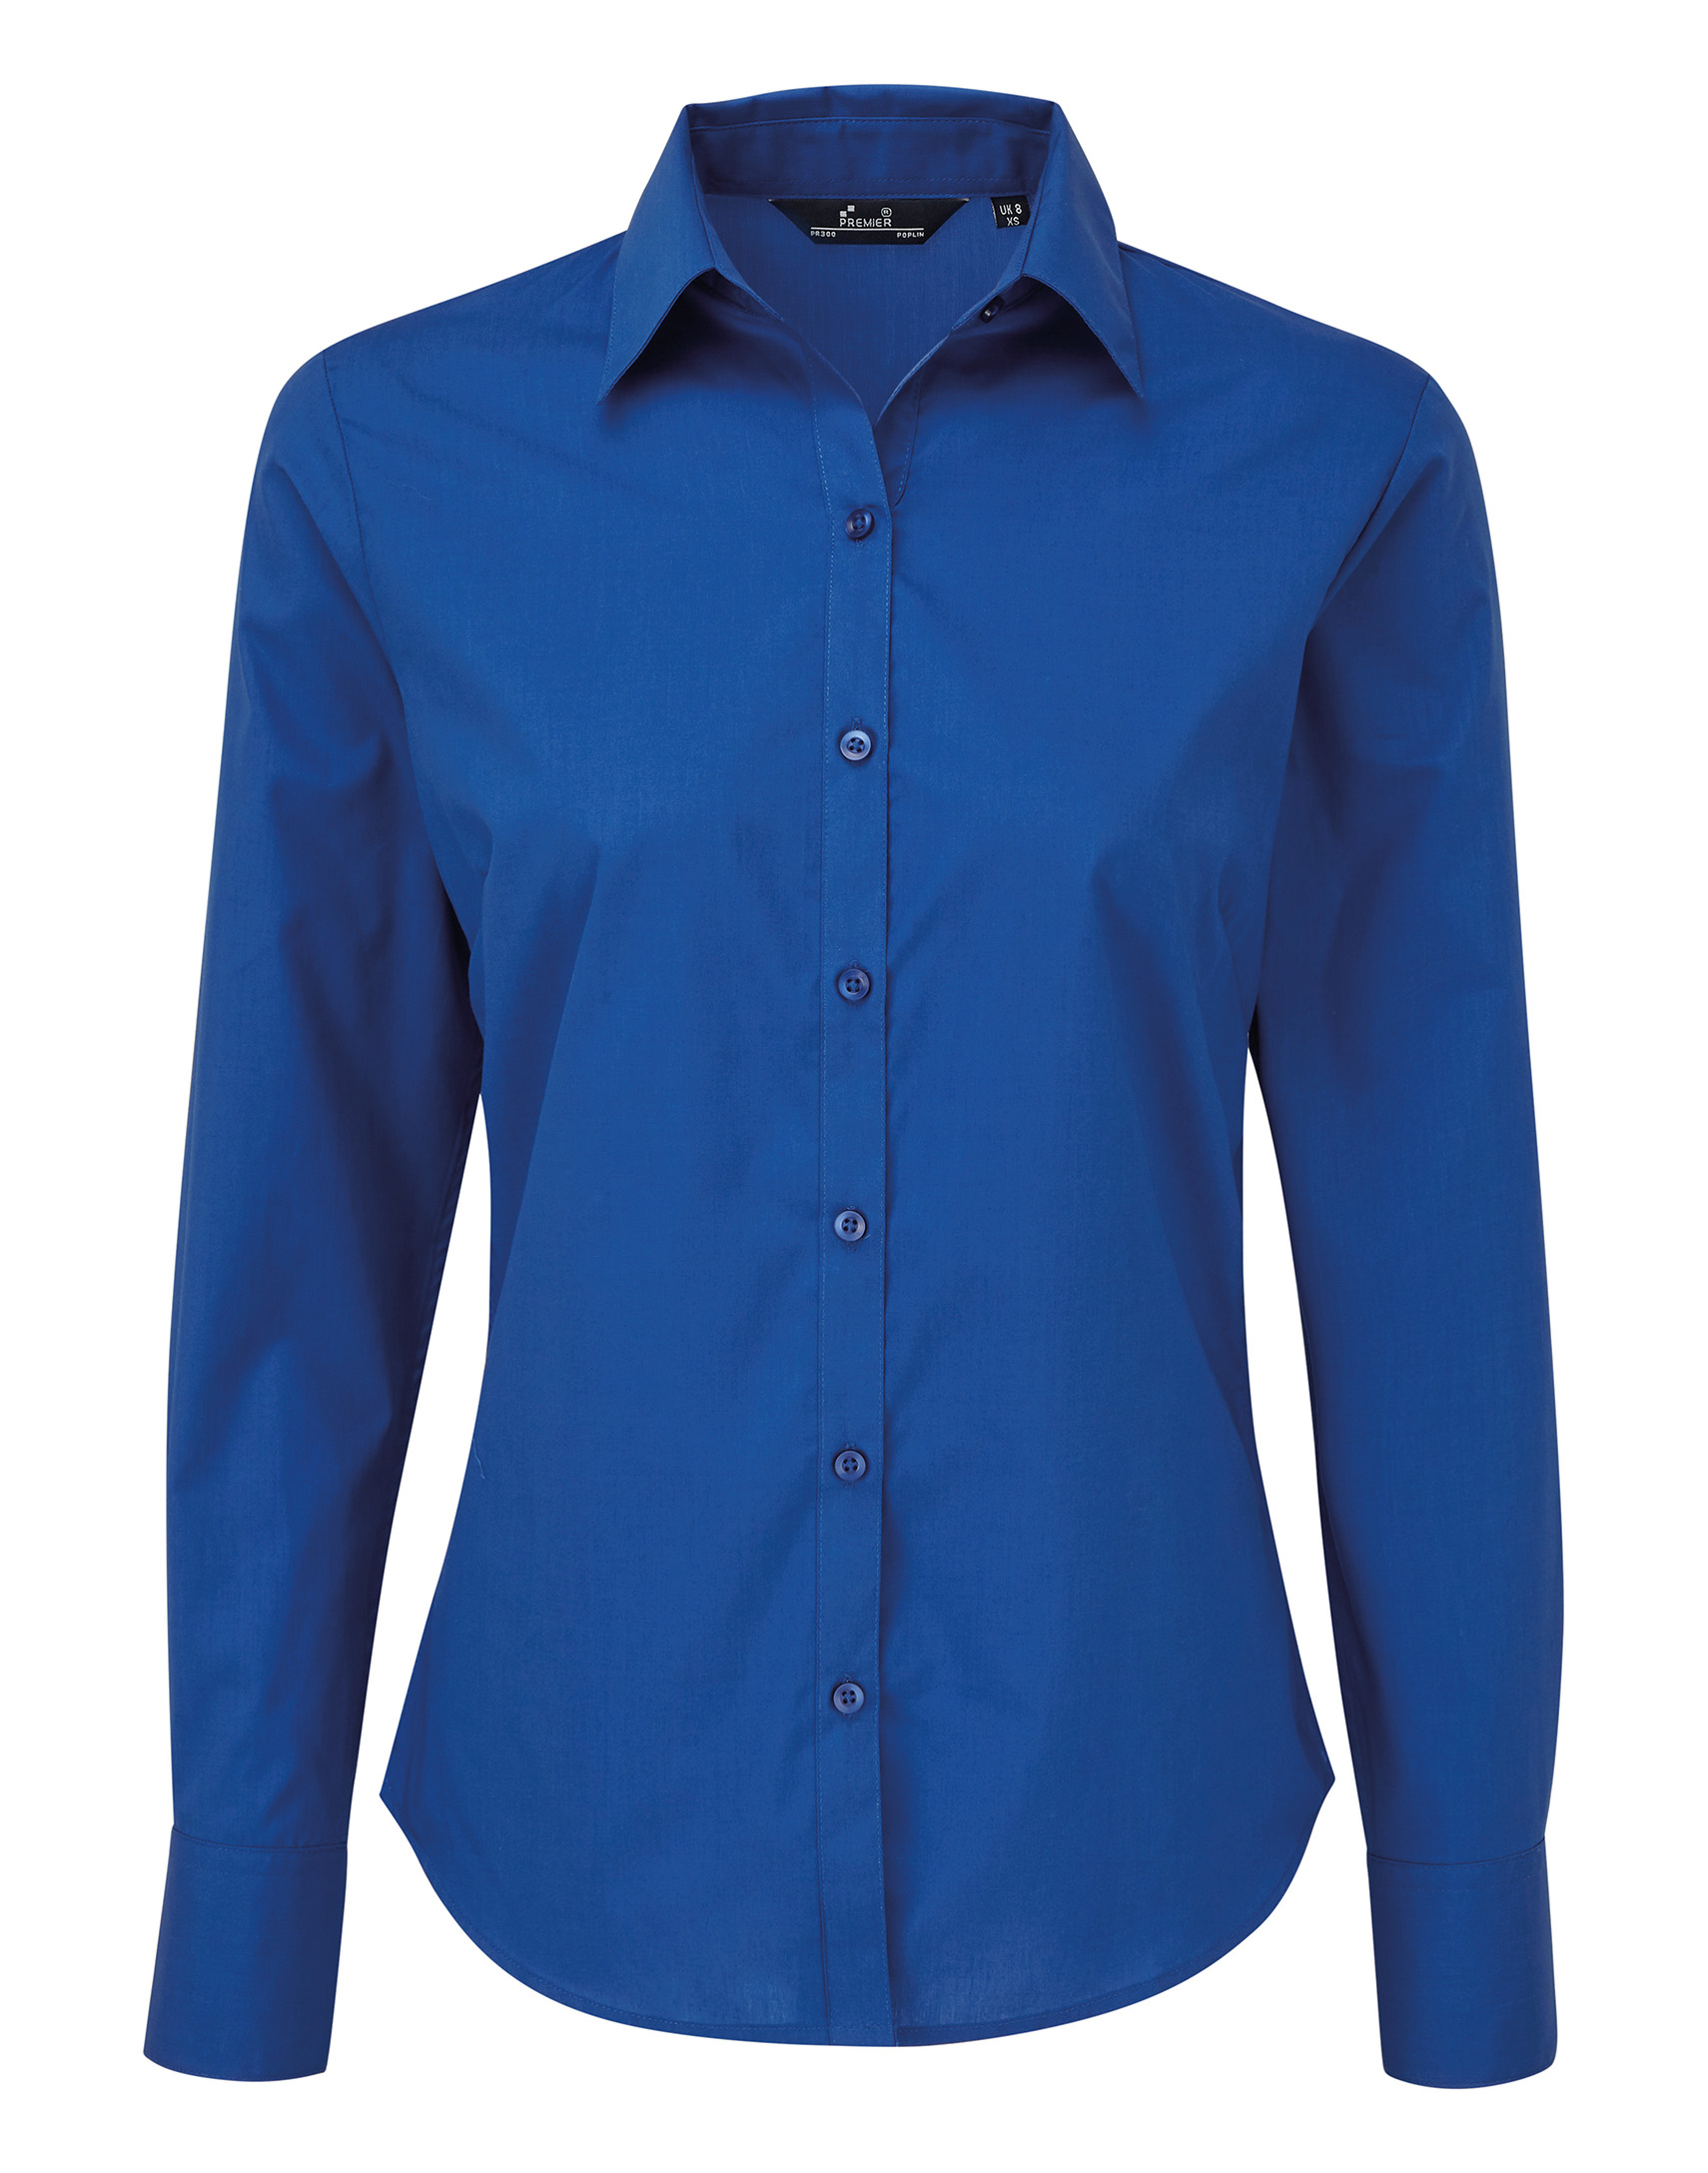 PR250 Unisex Casual Shirt Premier Mulligan Check Cotton Long Sleeve Shirt